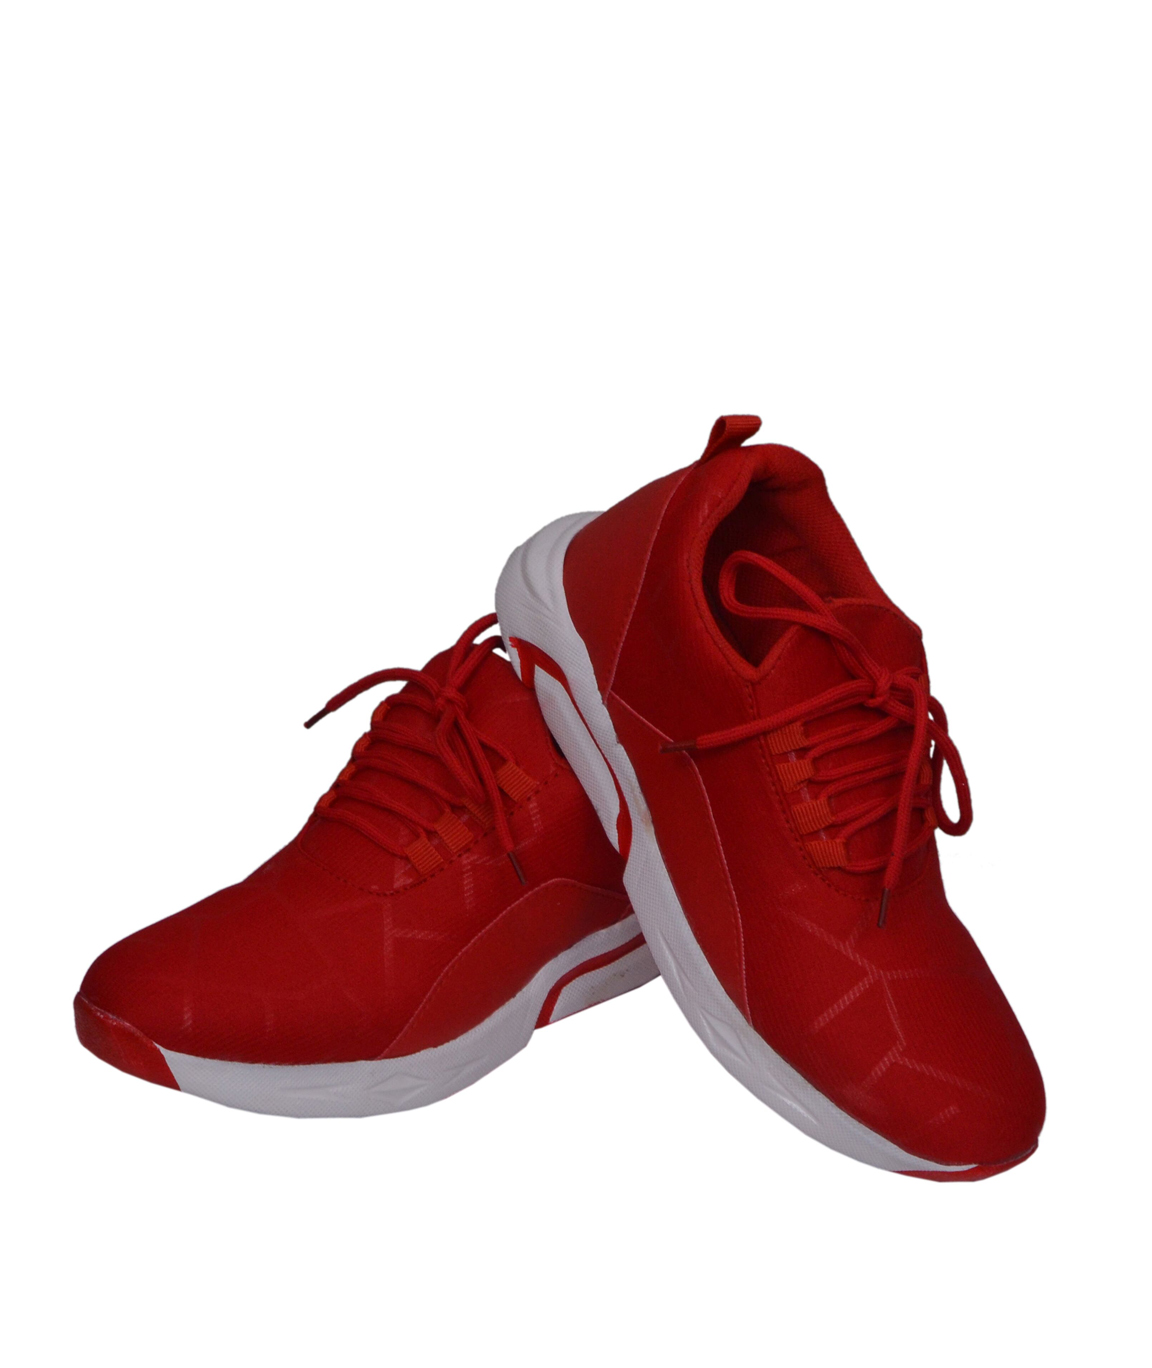 FEEDOT PURE RED Sneakers For Men - Buy FEEDOT PURE RED Sneakers For Men  Online at Best Price - Shop Online for Footwears in India | Flipkart.com